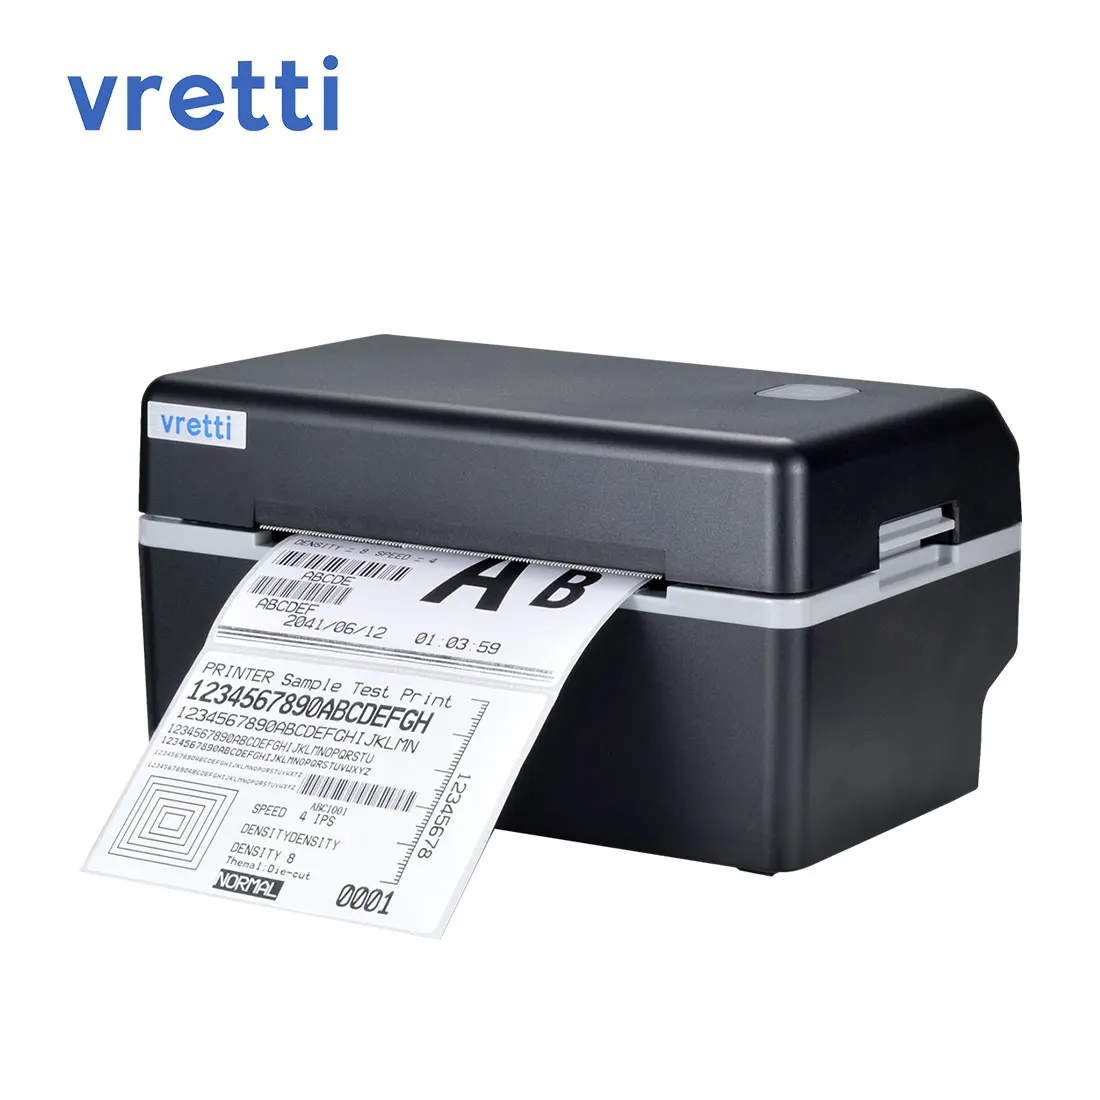 

Hot sale direct thermal barcode sticker printer 4X6 shipping label printer vretti-D4602B